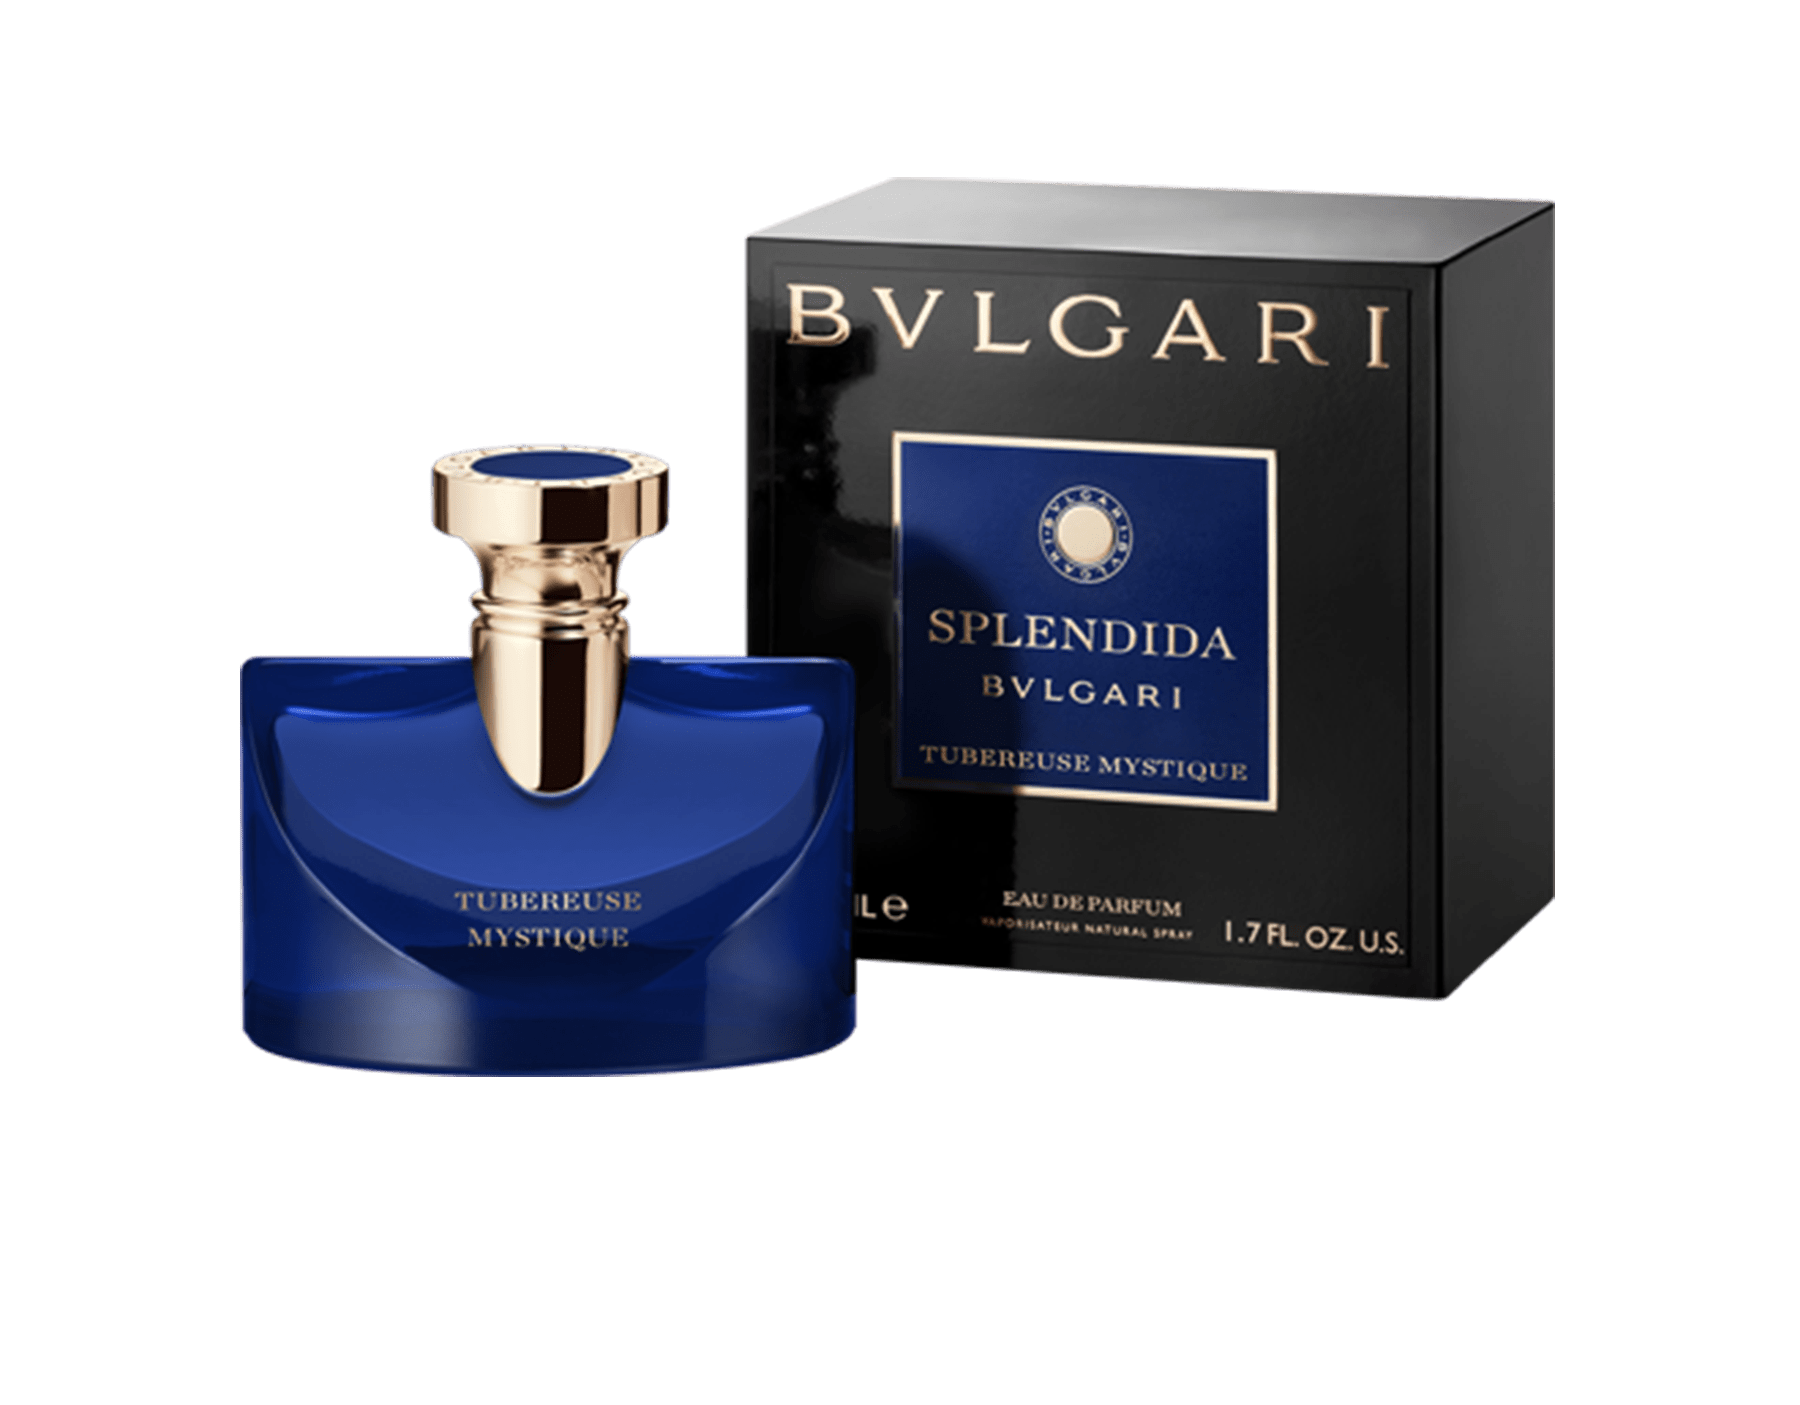 bvlgari perfume parent company